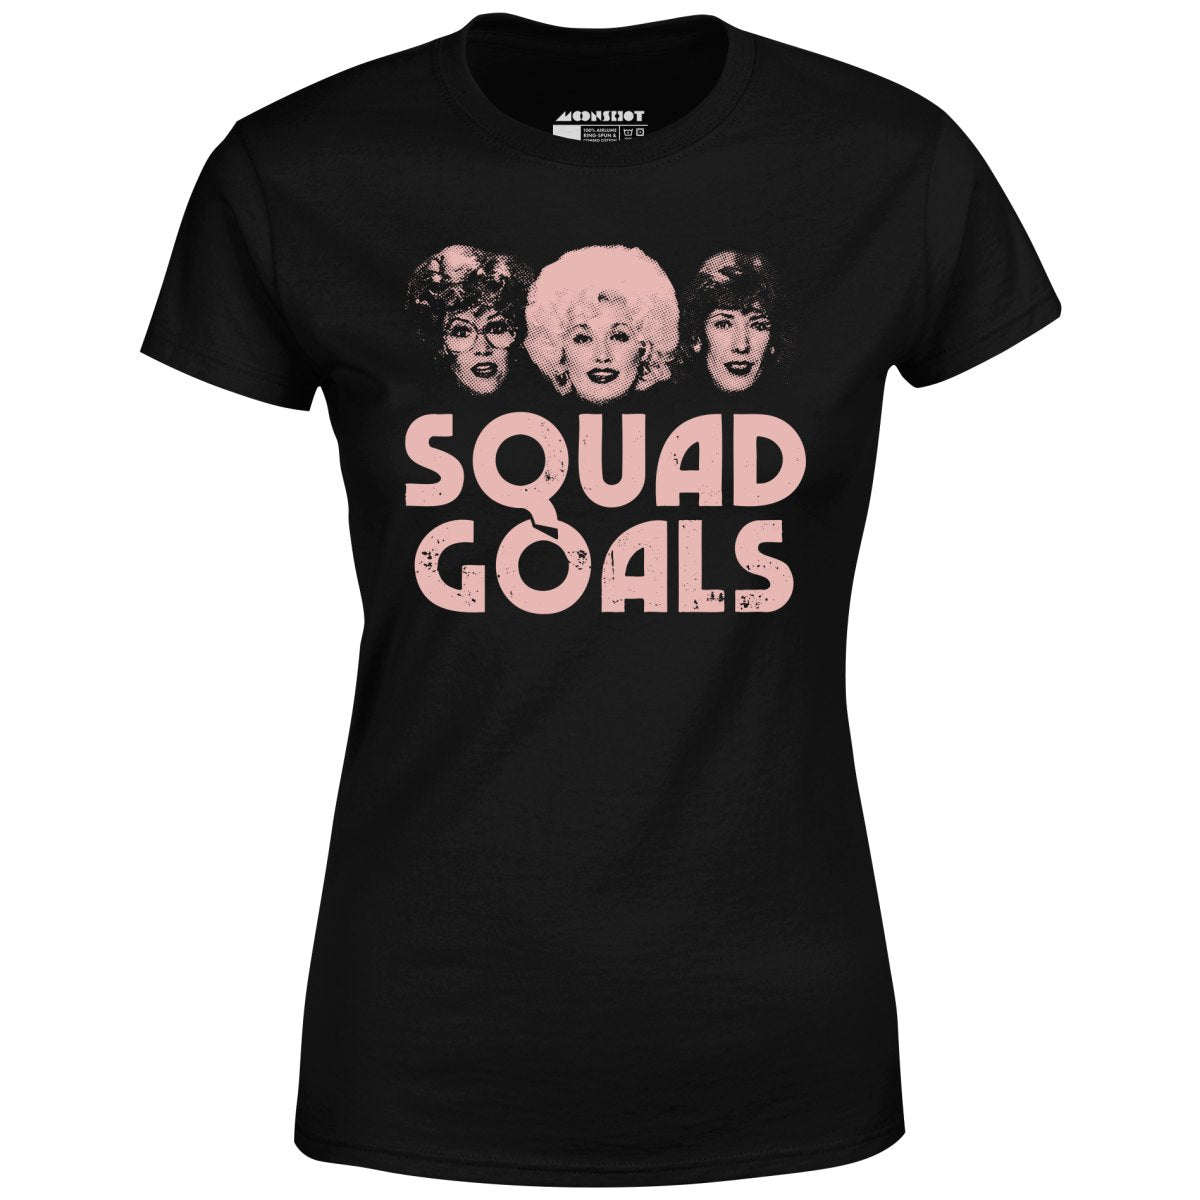 Squad Goals 9 to 5 - Women's T-Shirt